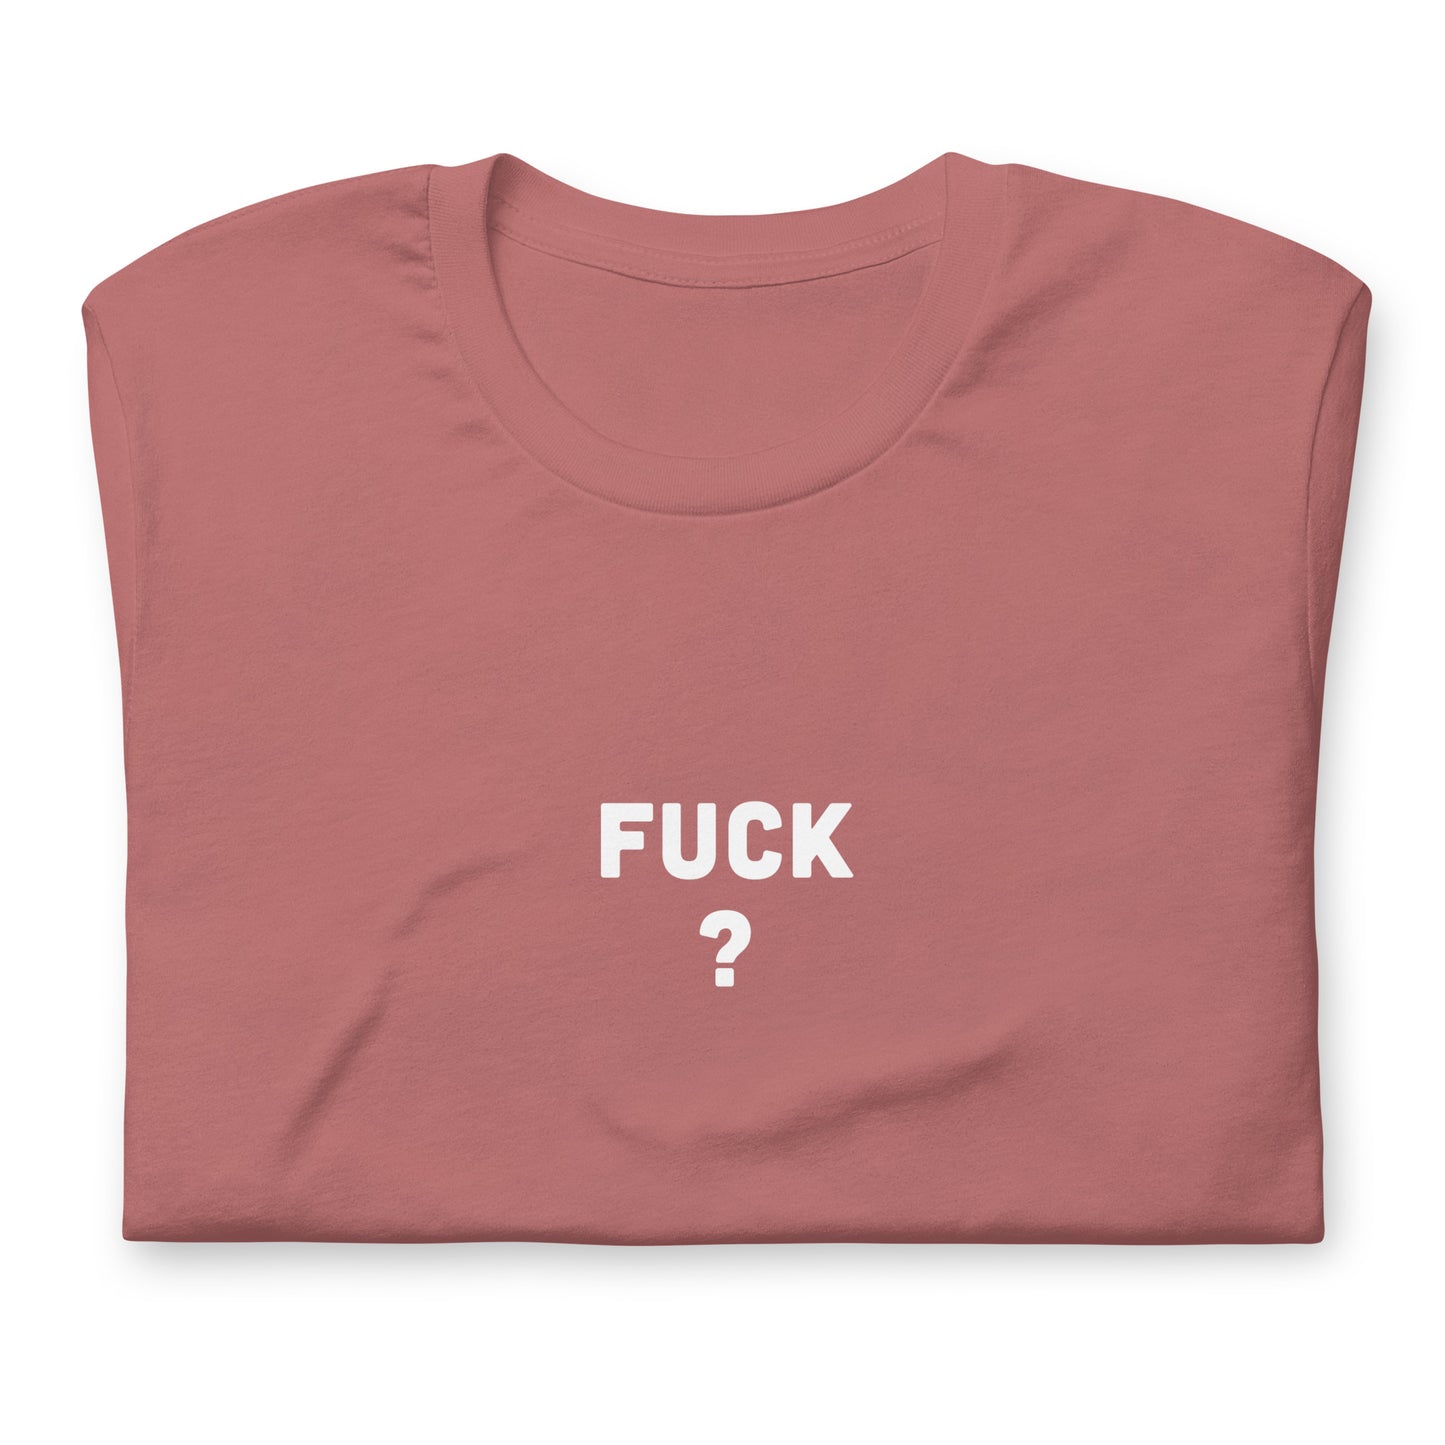 Fuck T-Shirt Size XL Color Navy